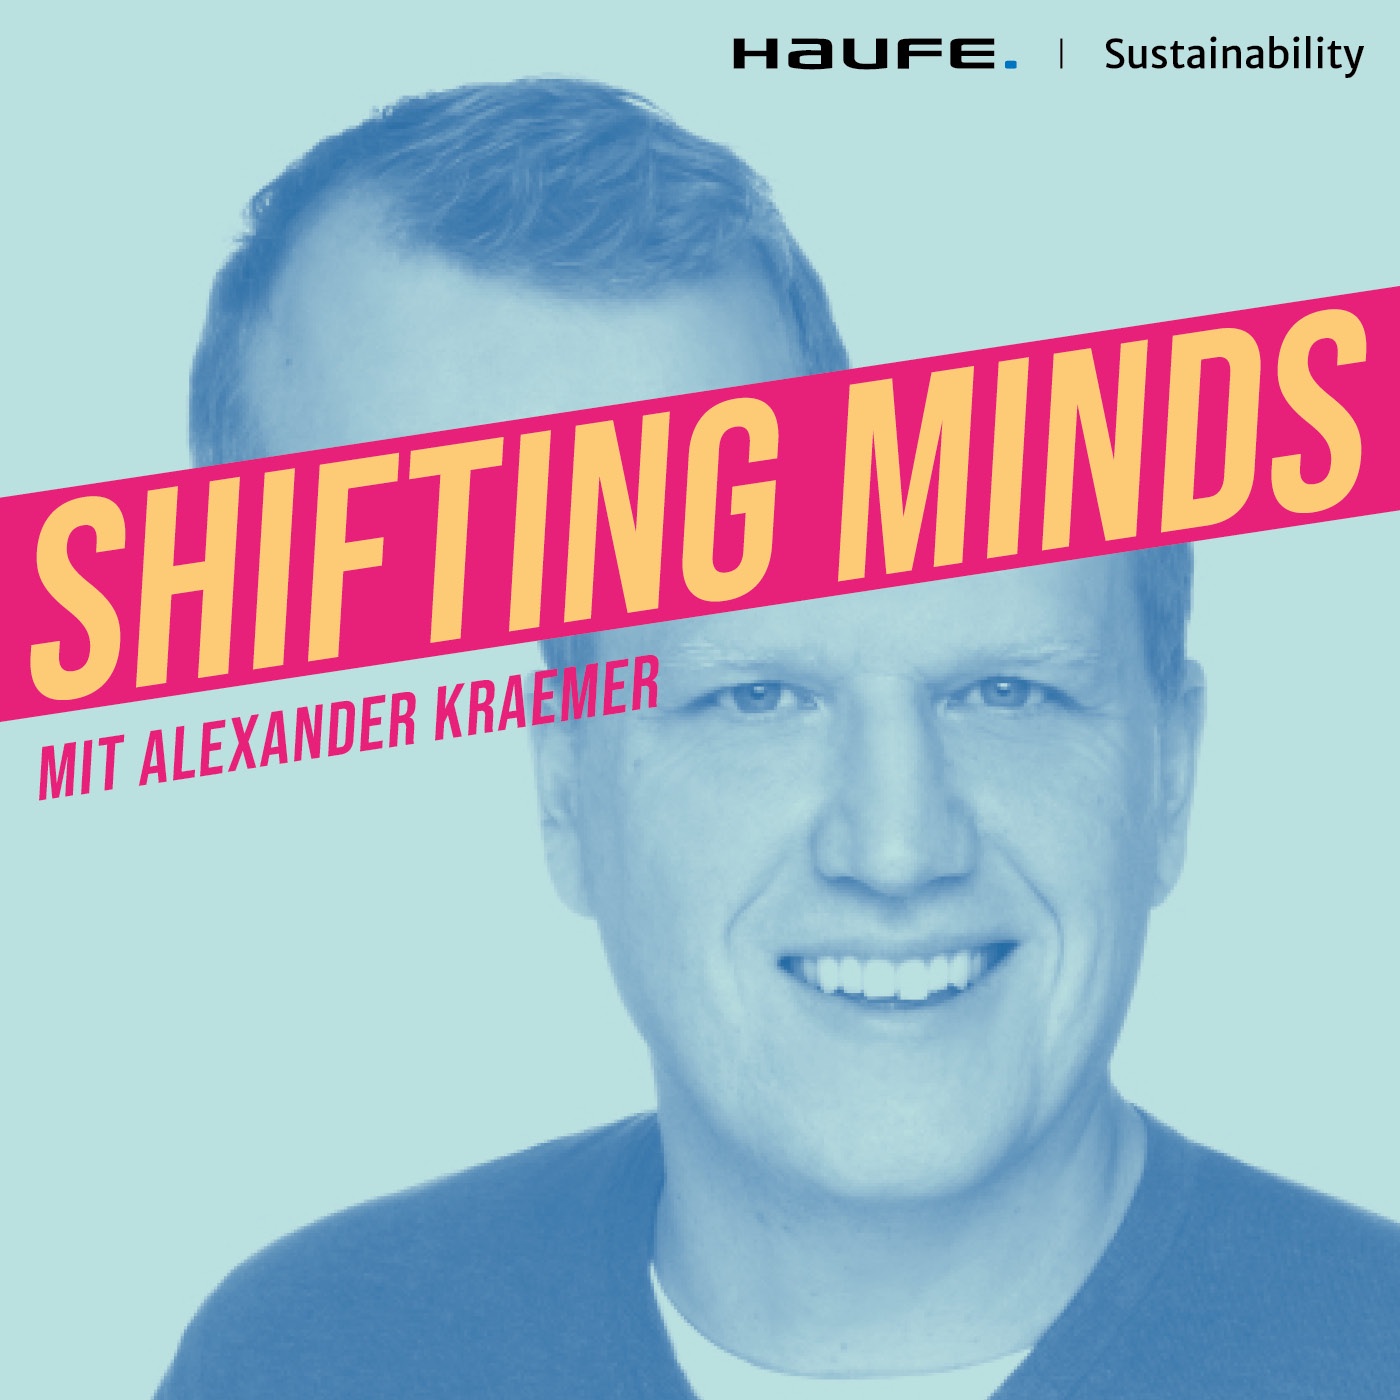 Shifting Minds - der Podcast von Haufe Sustainability